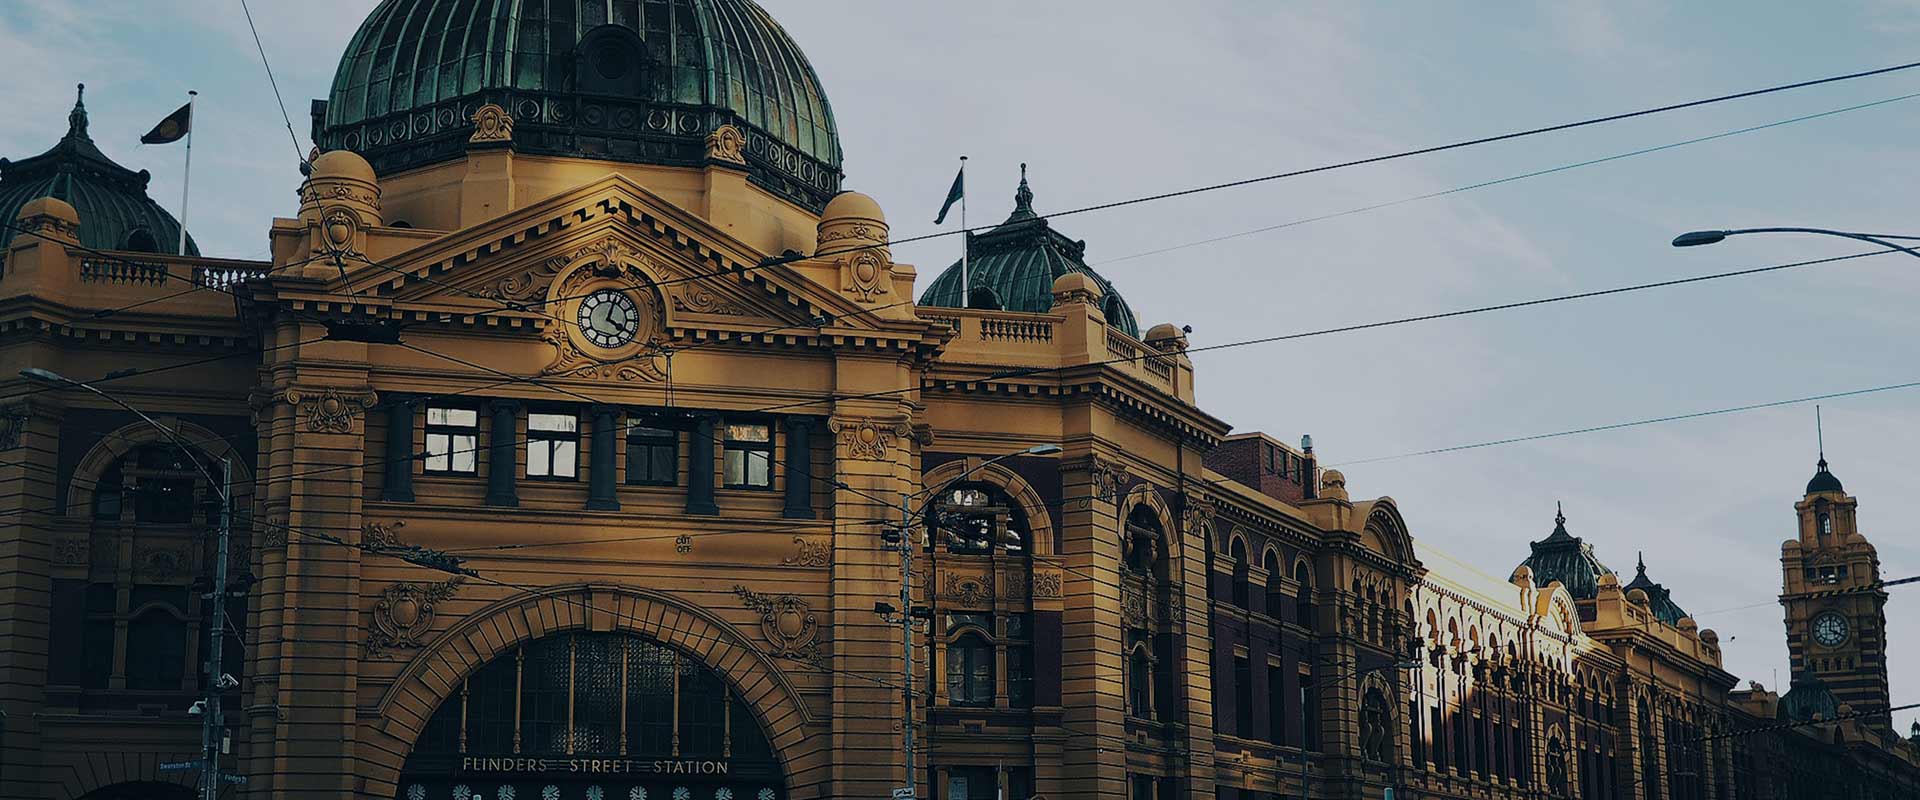 Flinders Street Station Melbourne Australia - CRL Australia